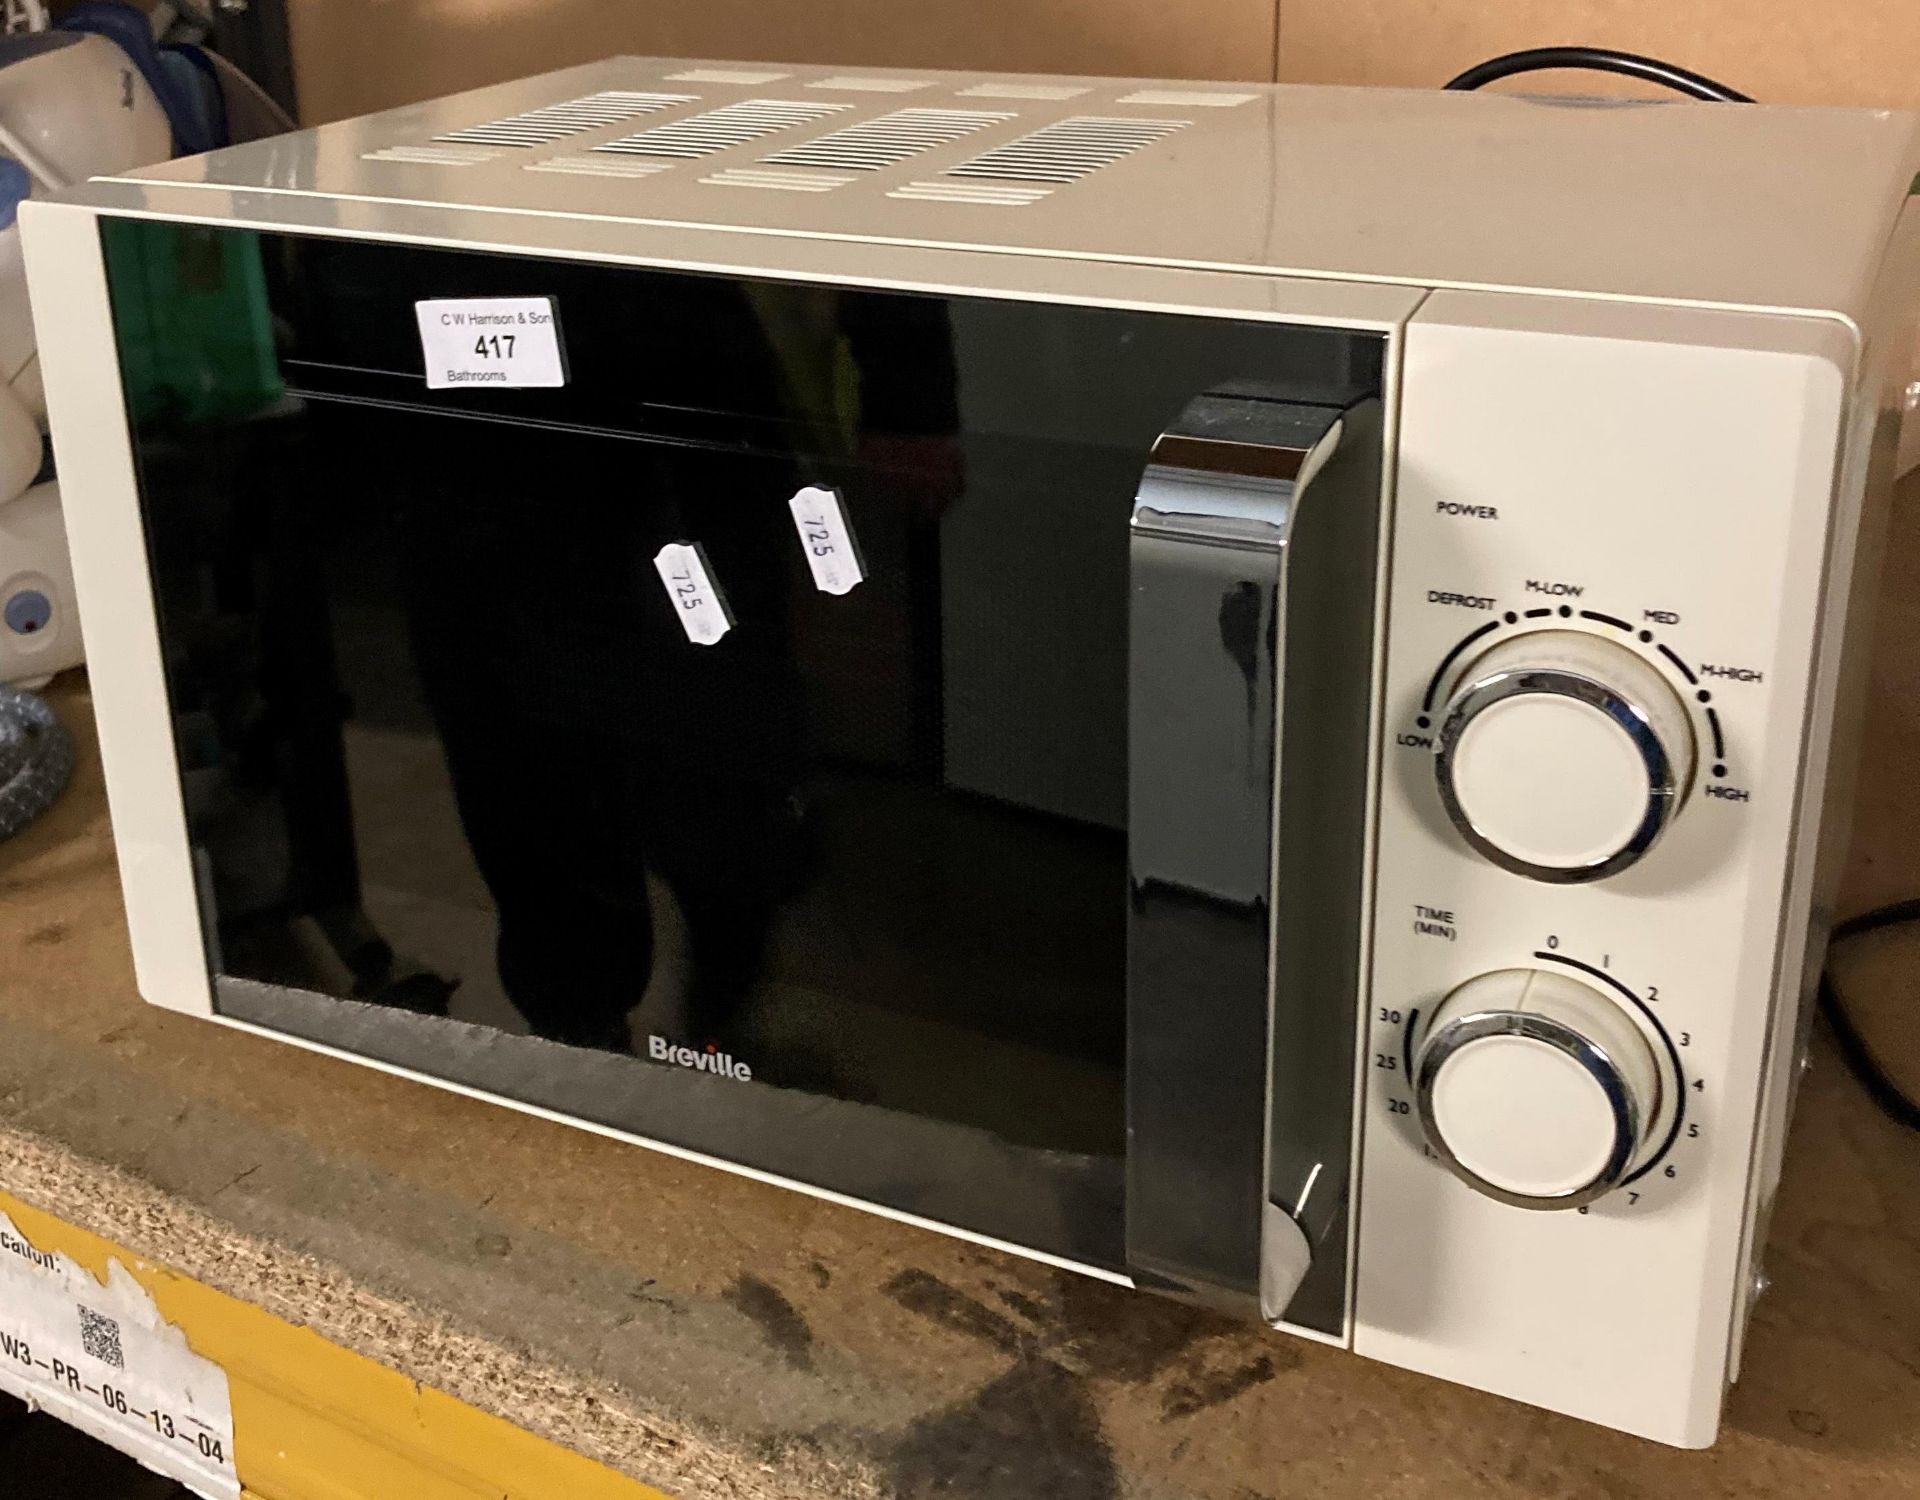 Breville microwave oven (saleroom location: PO)